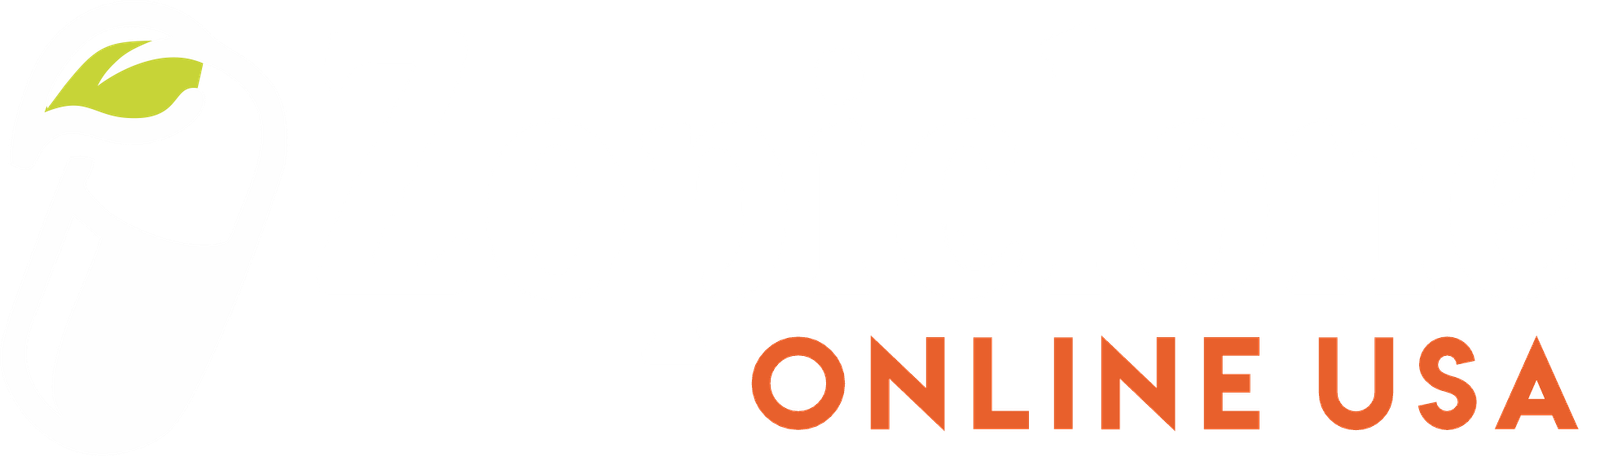 zopicloneonline-footer-logo